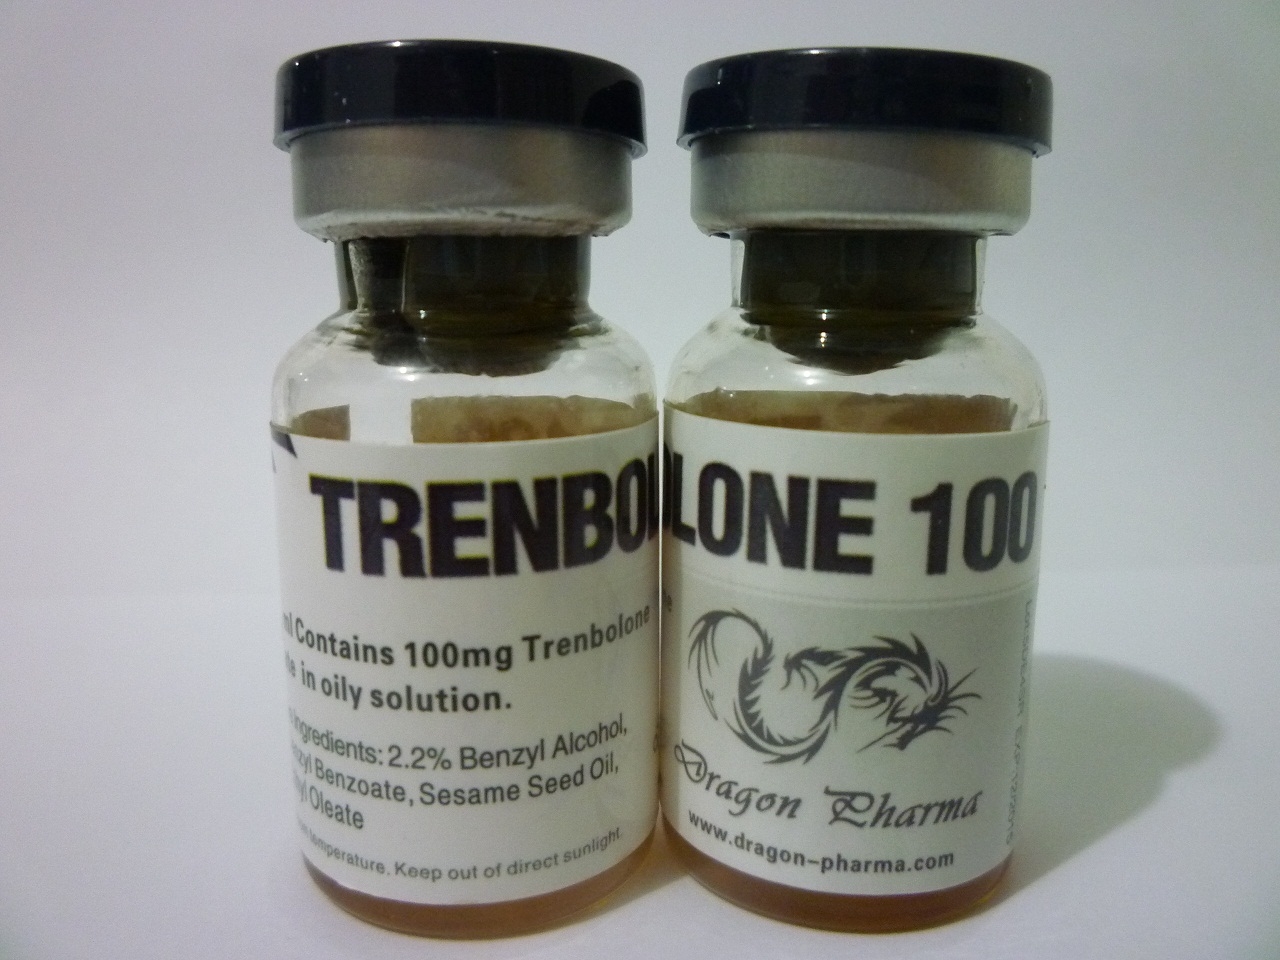 Trenbolone 100 (Trenbolone Acetate)